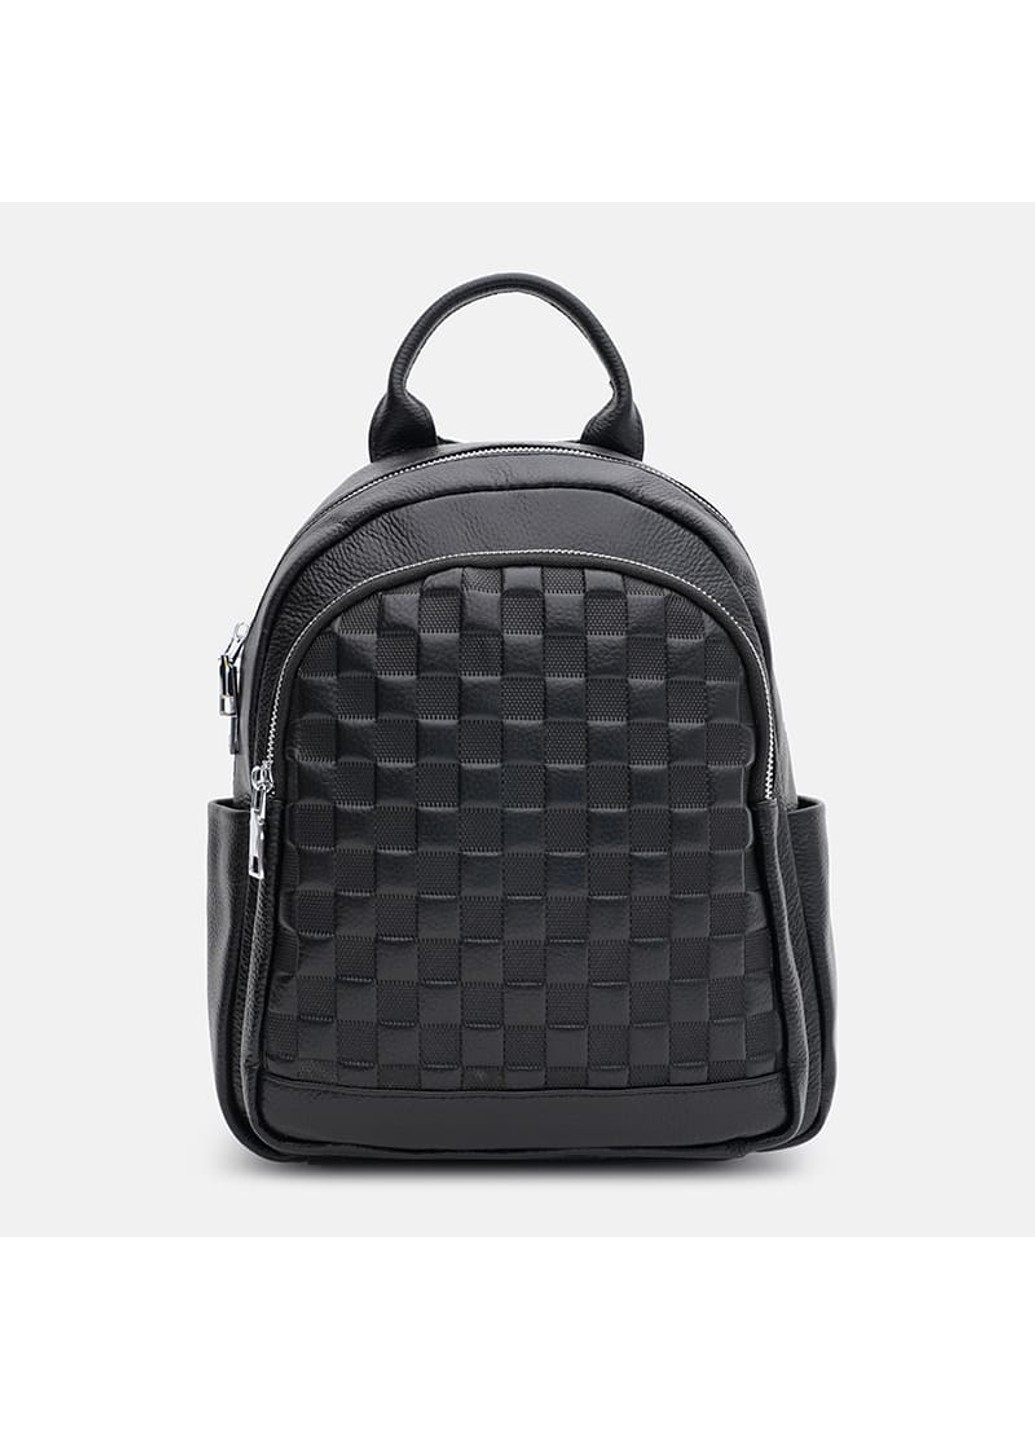 Женский кожаный рюкзак K18885bl-black Ricco Grande (271665116)